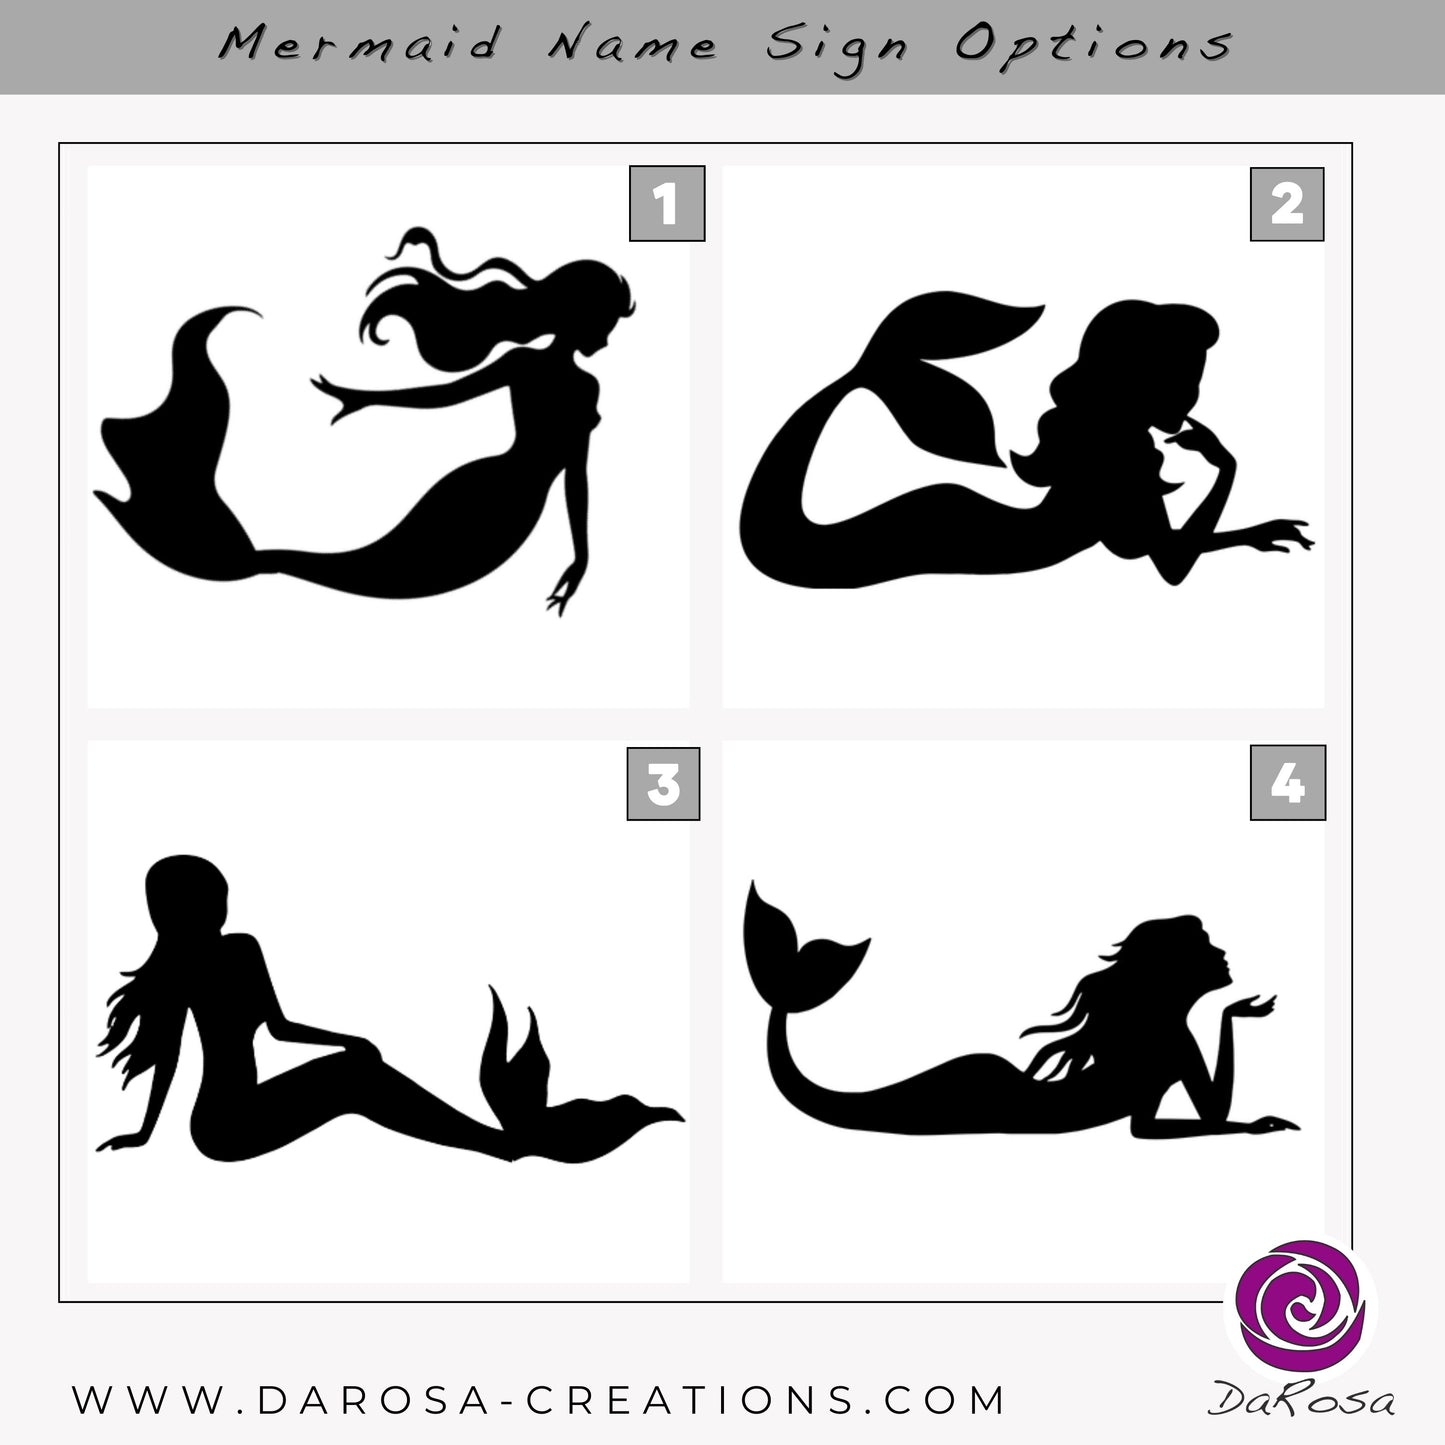 Mermaid Name Sign